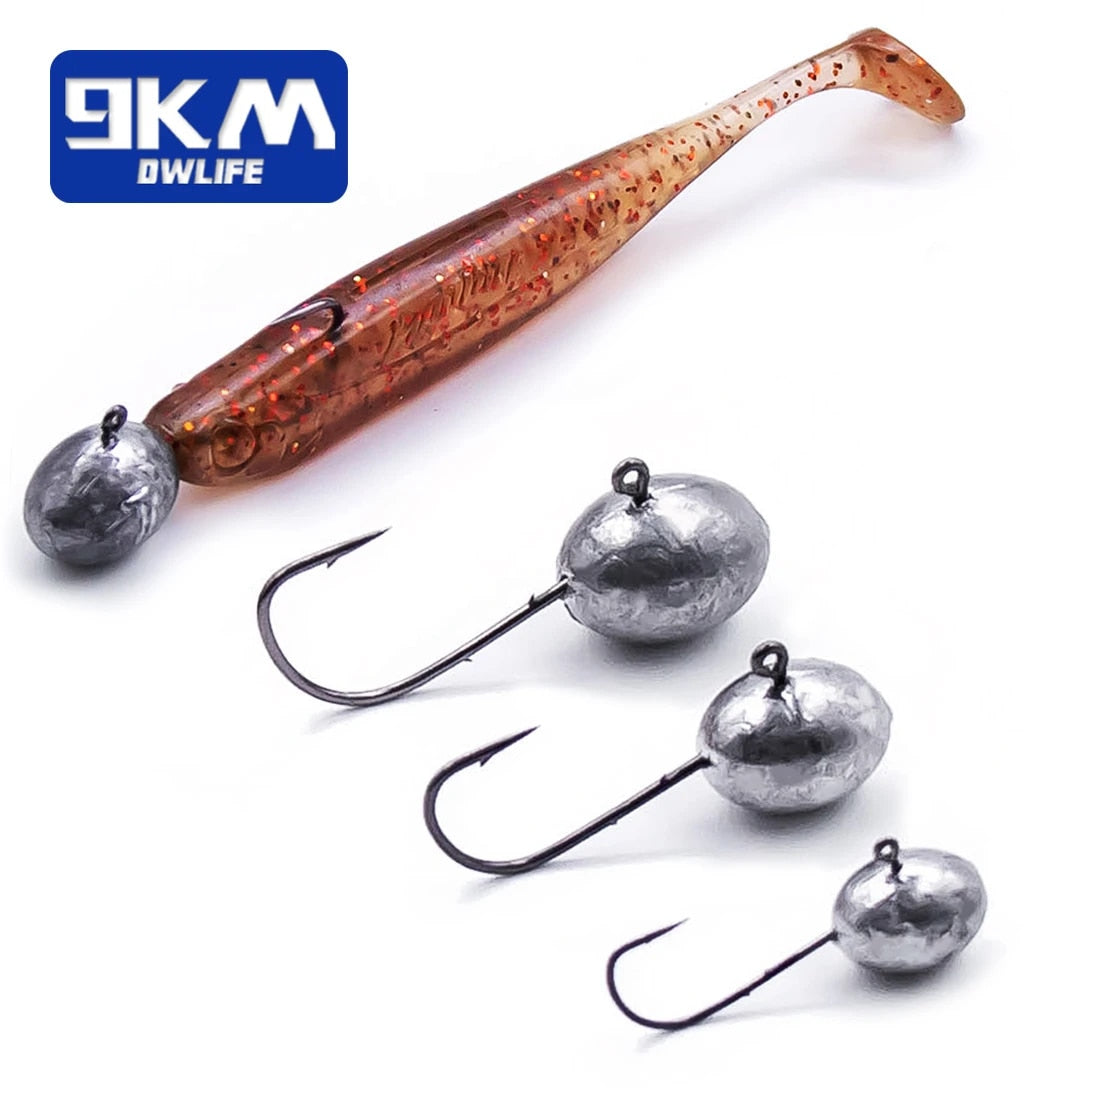 5pcs/lot 0.5g-4g Micro Jig Head Fishing Hooks Copper Head Mini Crank Jig  Fishhook Soft Worm Lure Fishing Accessories